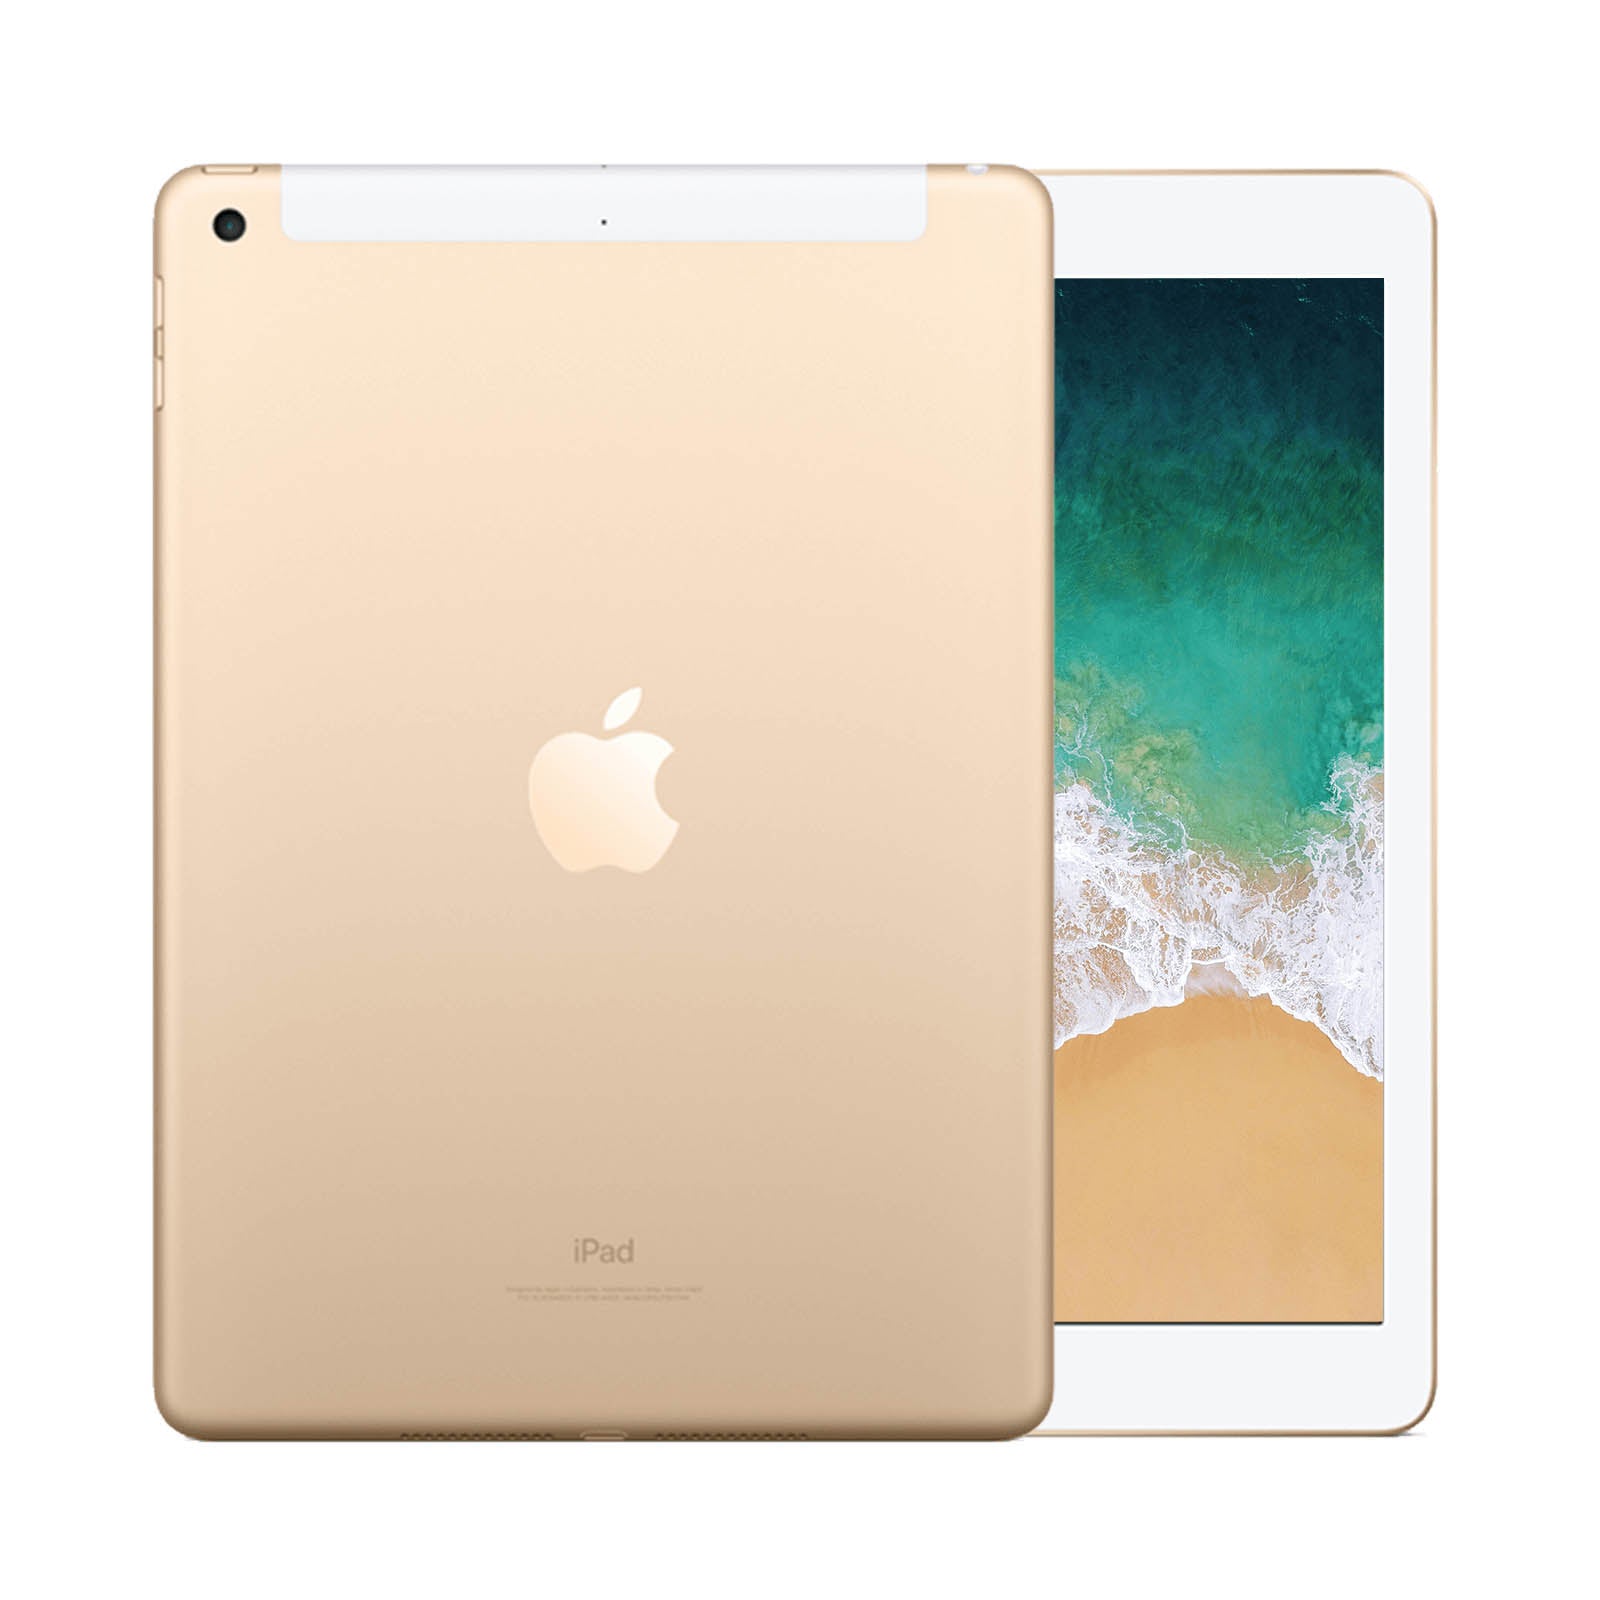 Refurbished Apple iPad Air 2 128GB WiFi & Cellular Gold 128GB Gold Very Good